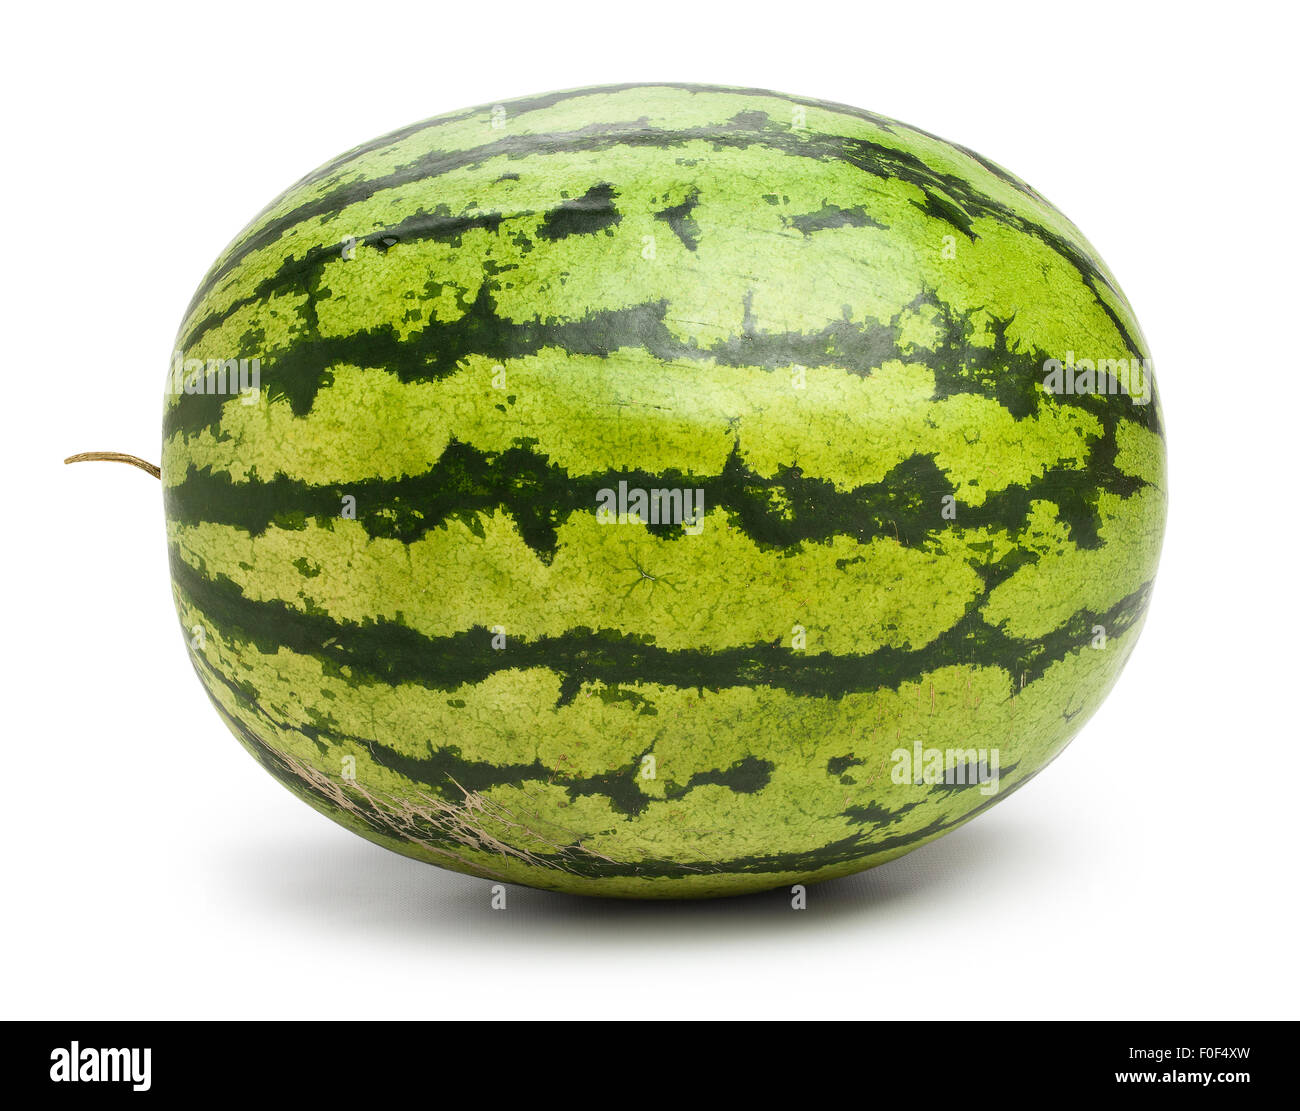 watermelon isolated Stock Photo